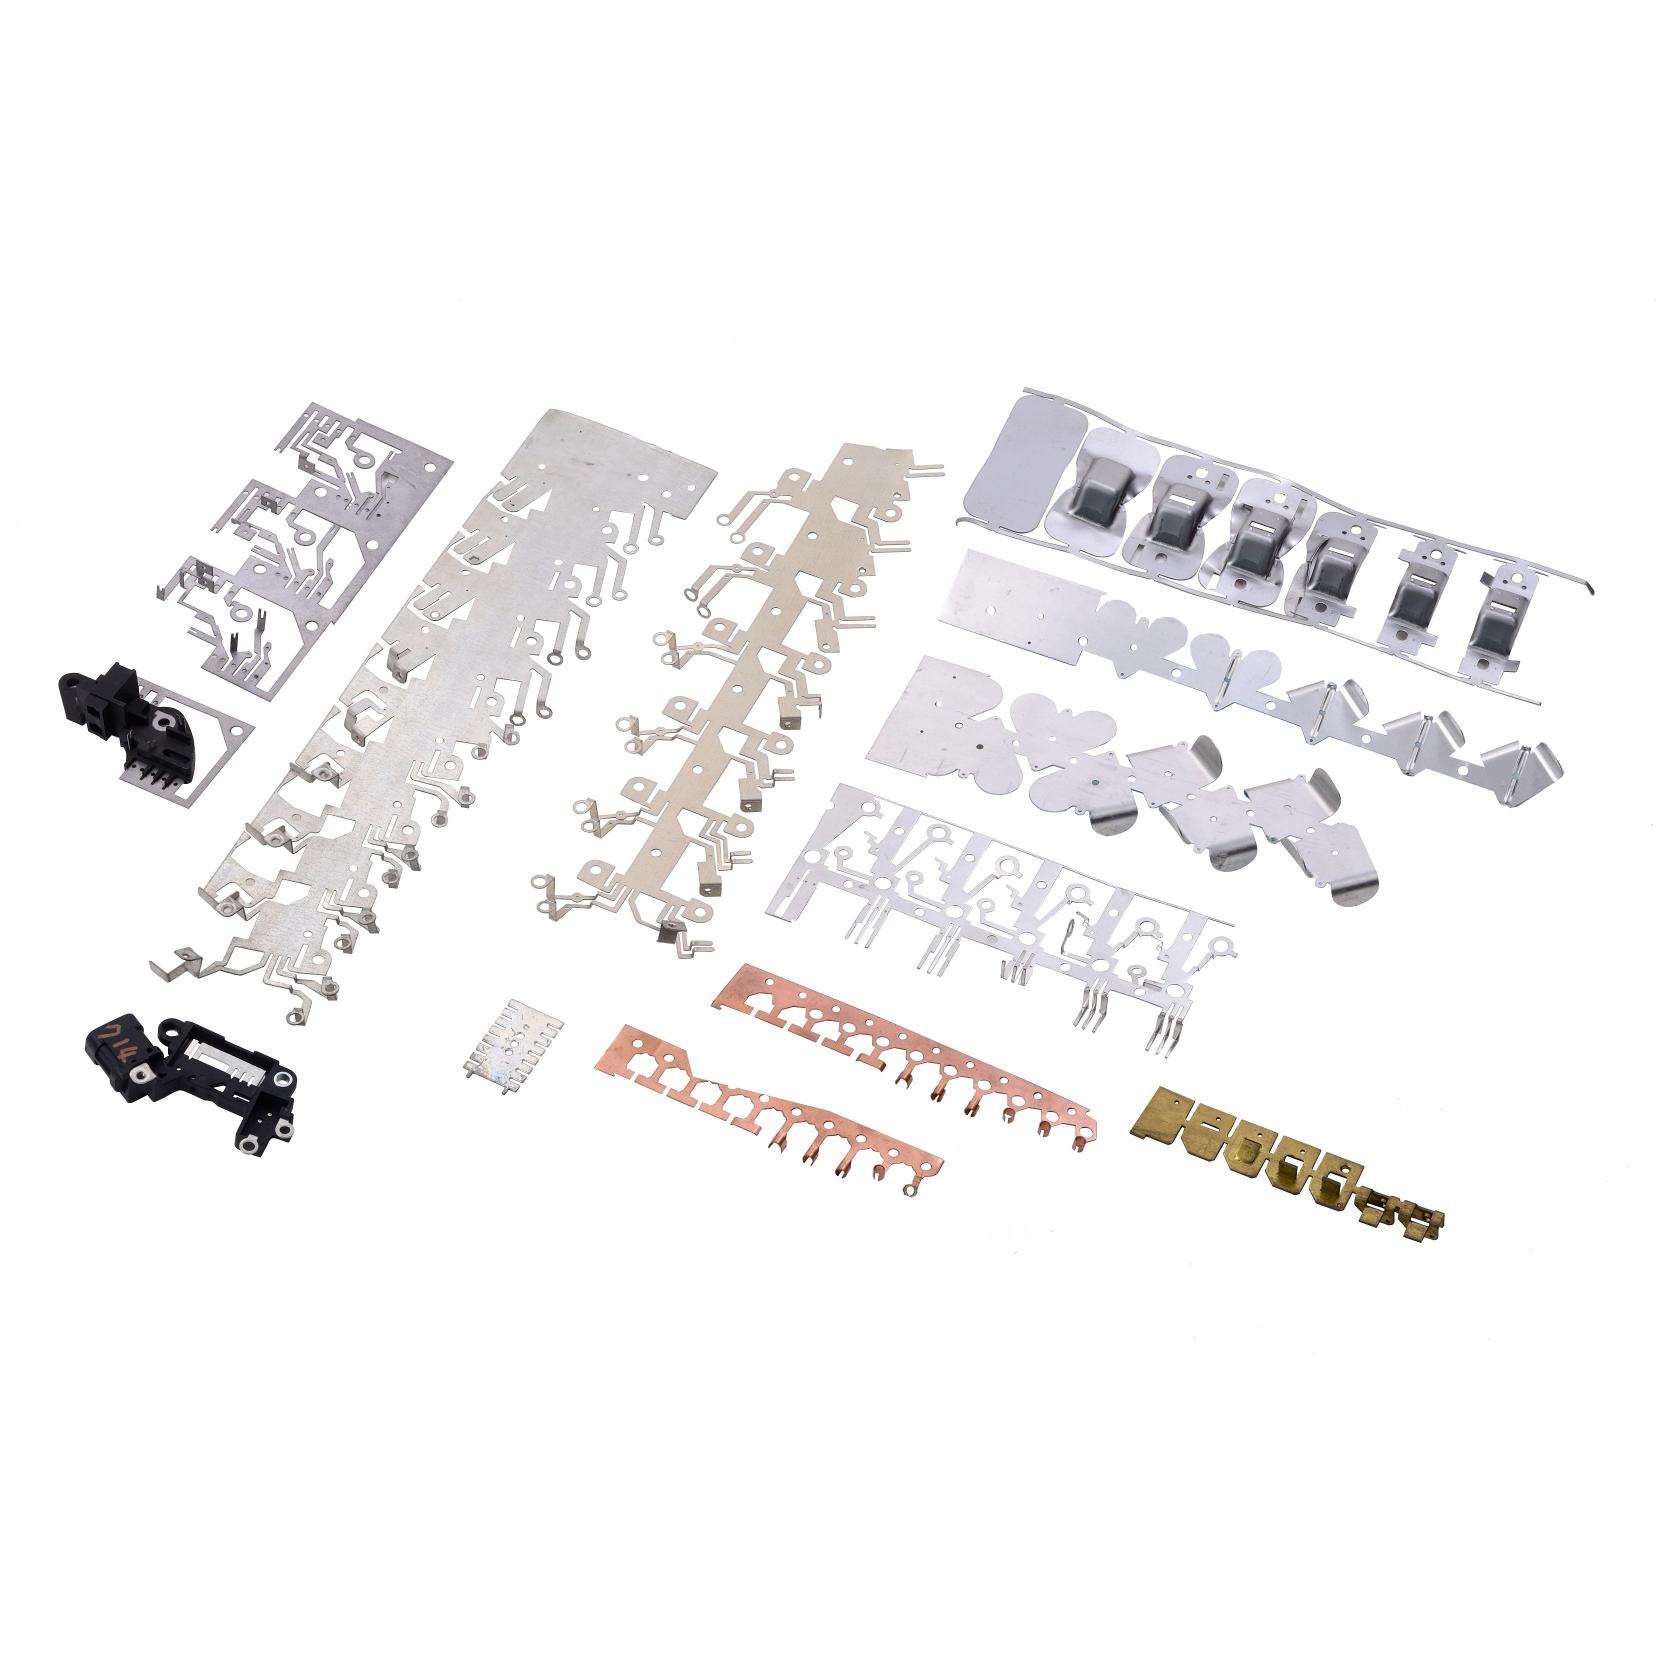 Progressive Stamping Parts, Plastic Injection Terminals